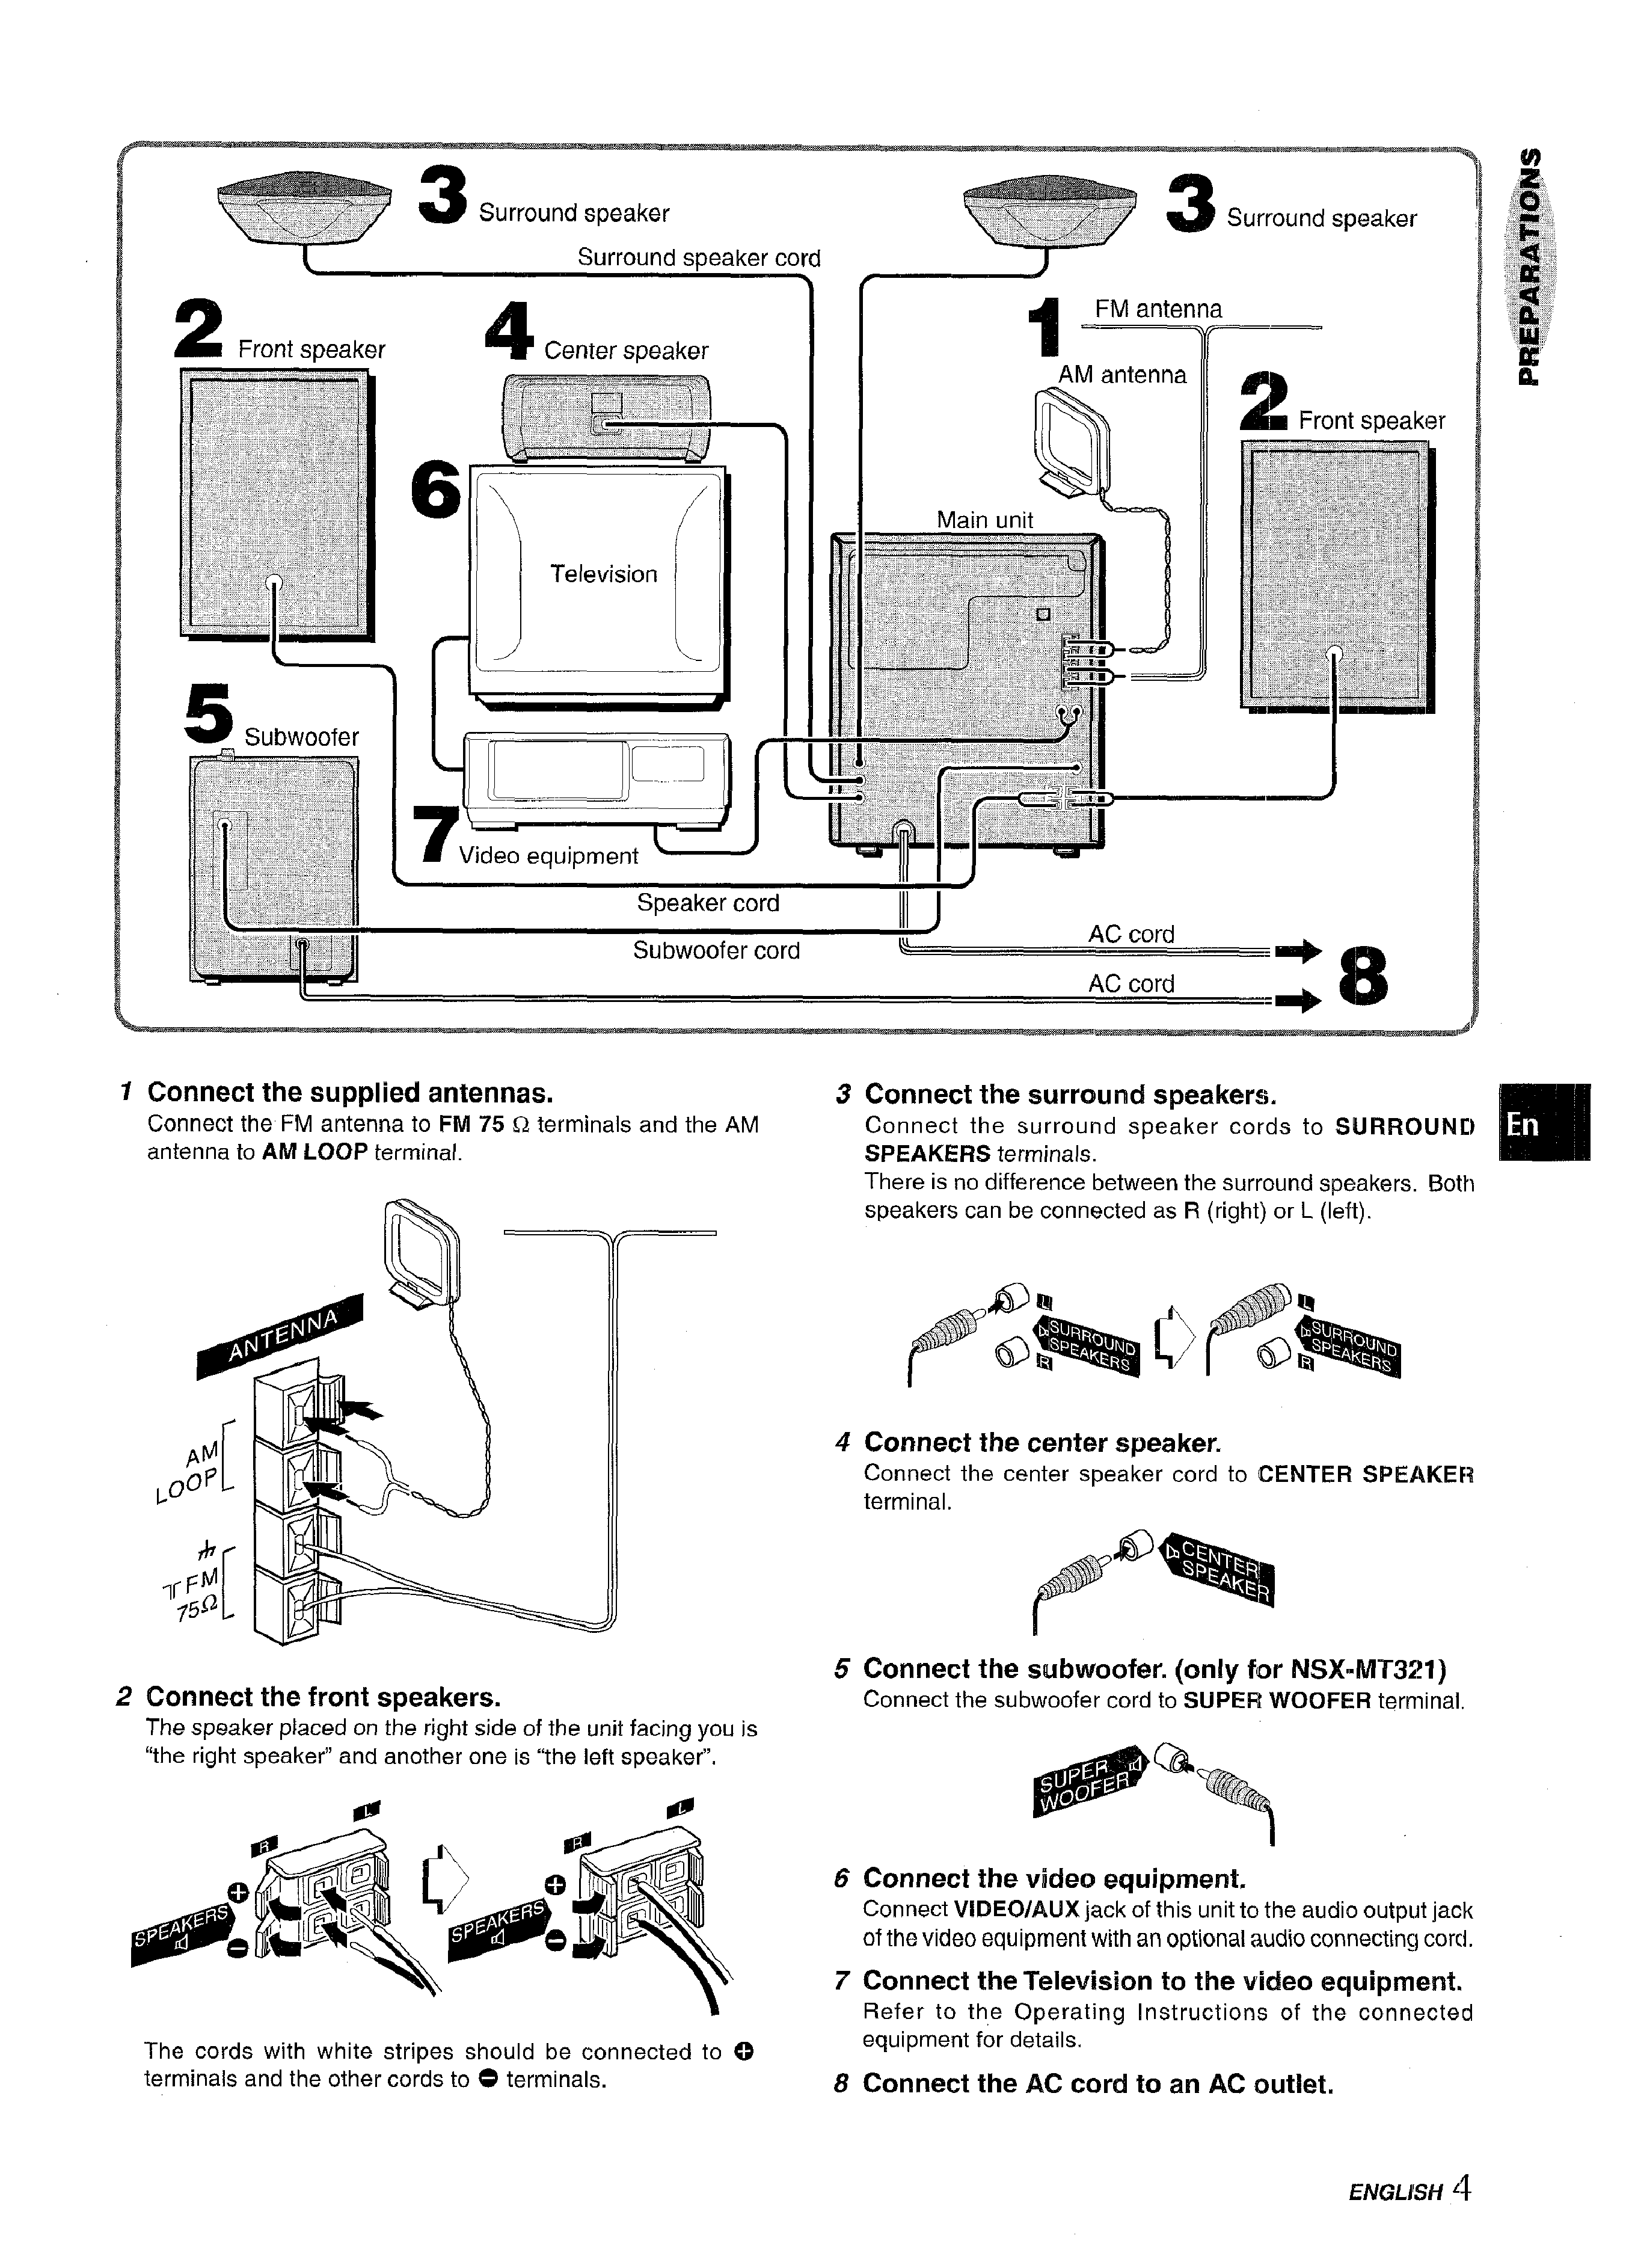 Wiring Panasonic Diagram Cq C5405U : Wiring Panasonic Diagram Cq C5405U - Diagram Panasonic Cq